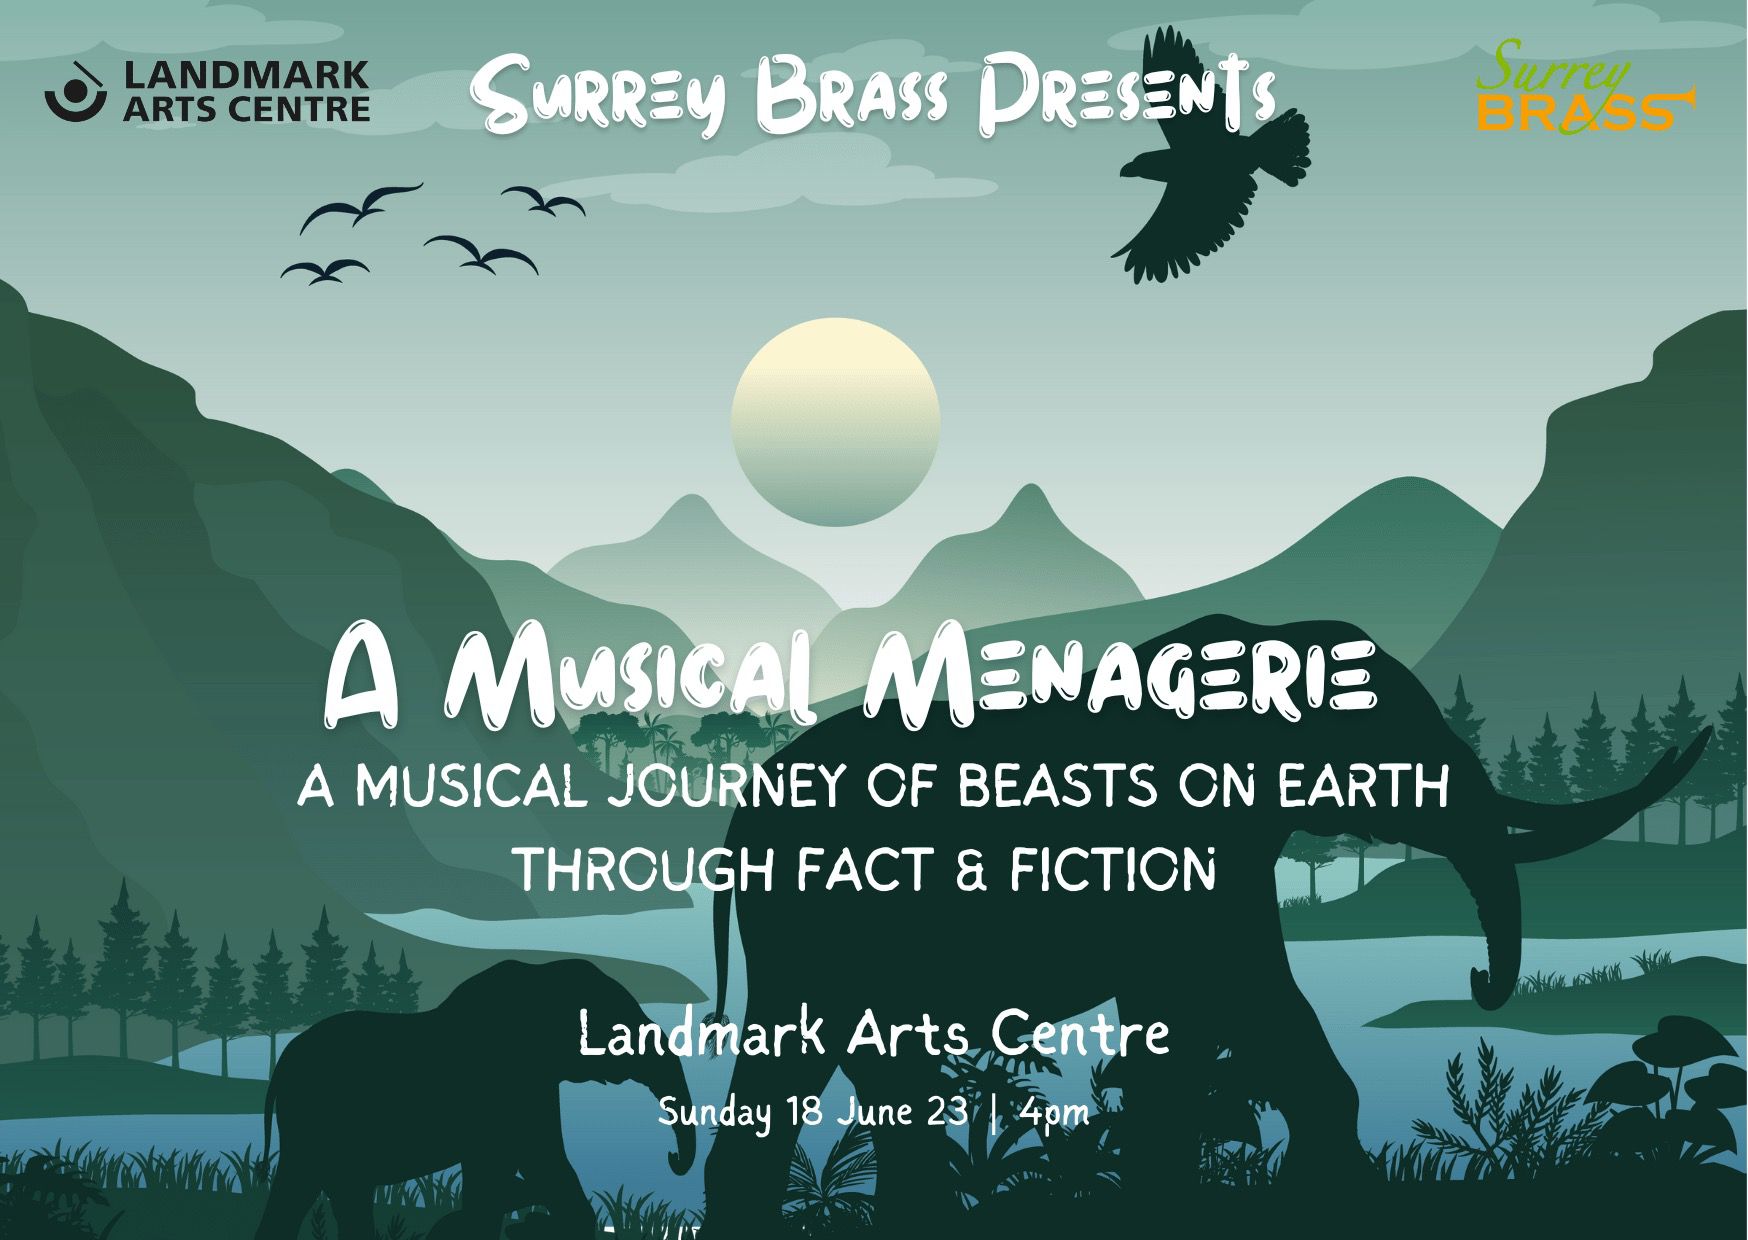 A Musical Menagerie Poster - Landmark Arts - Surrey Brass